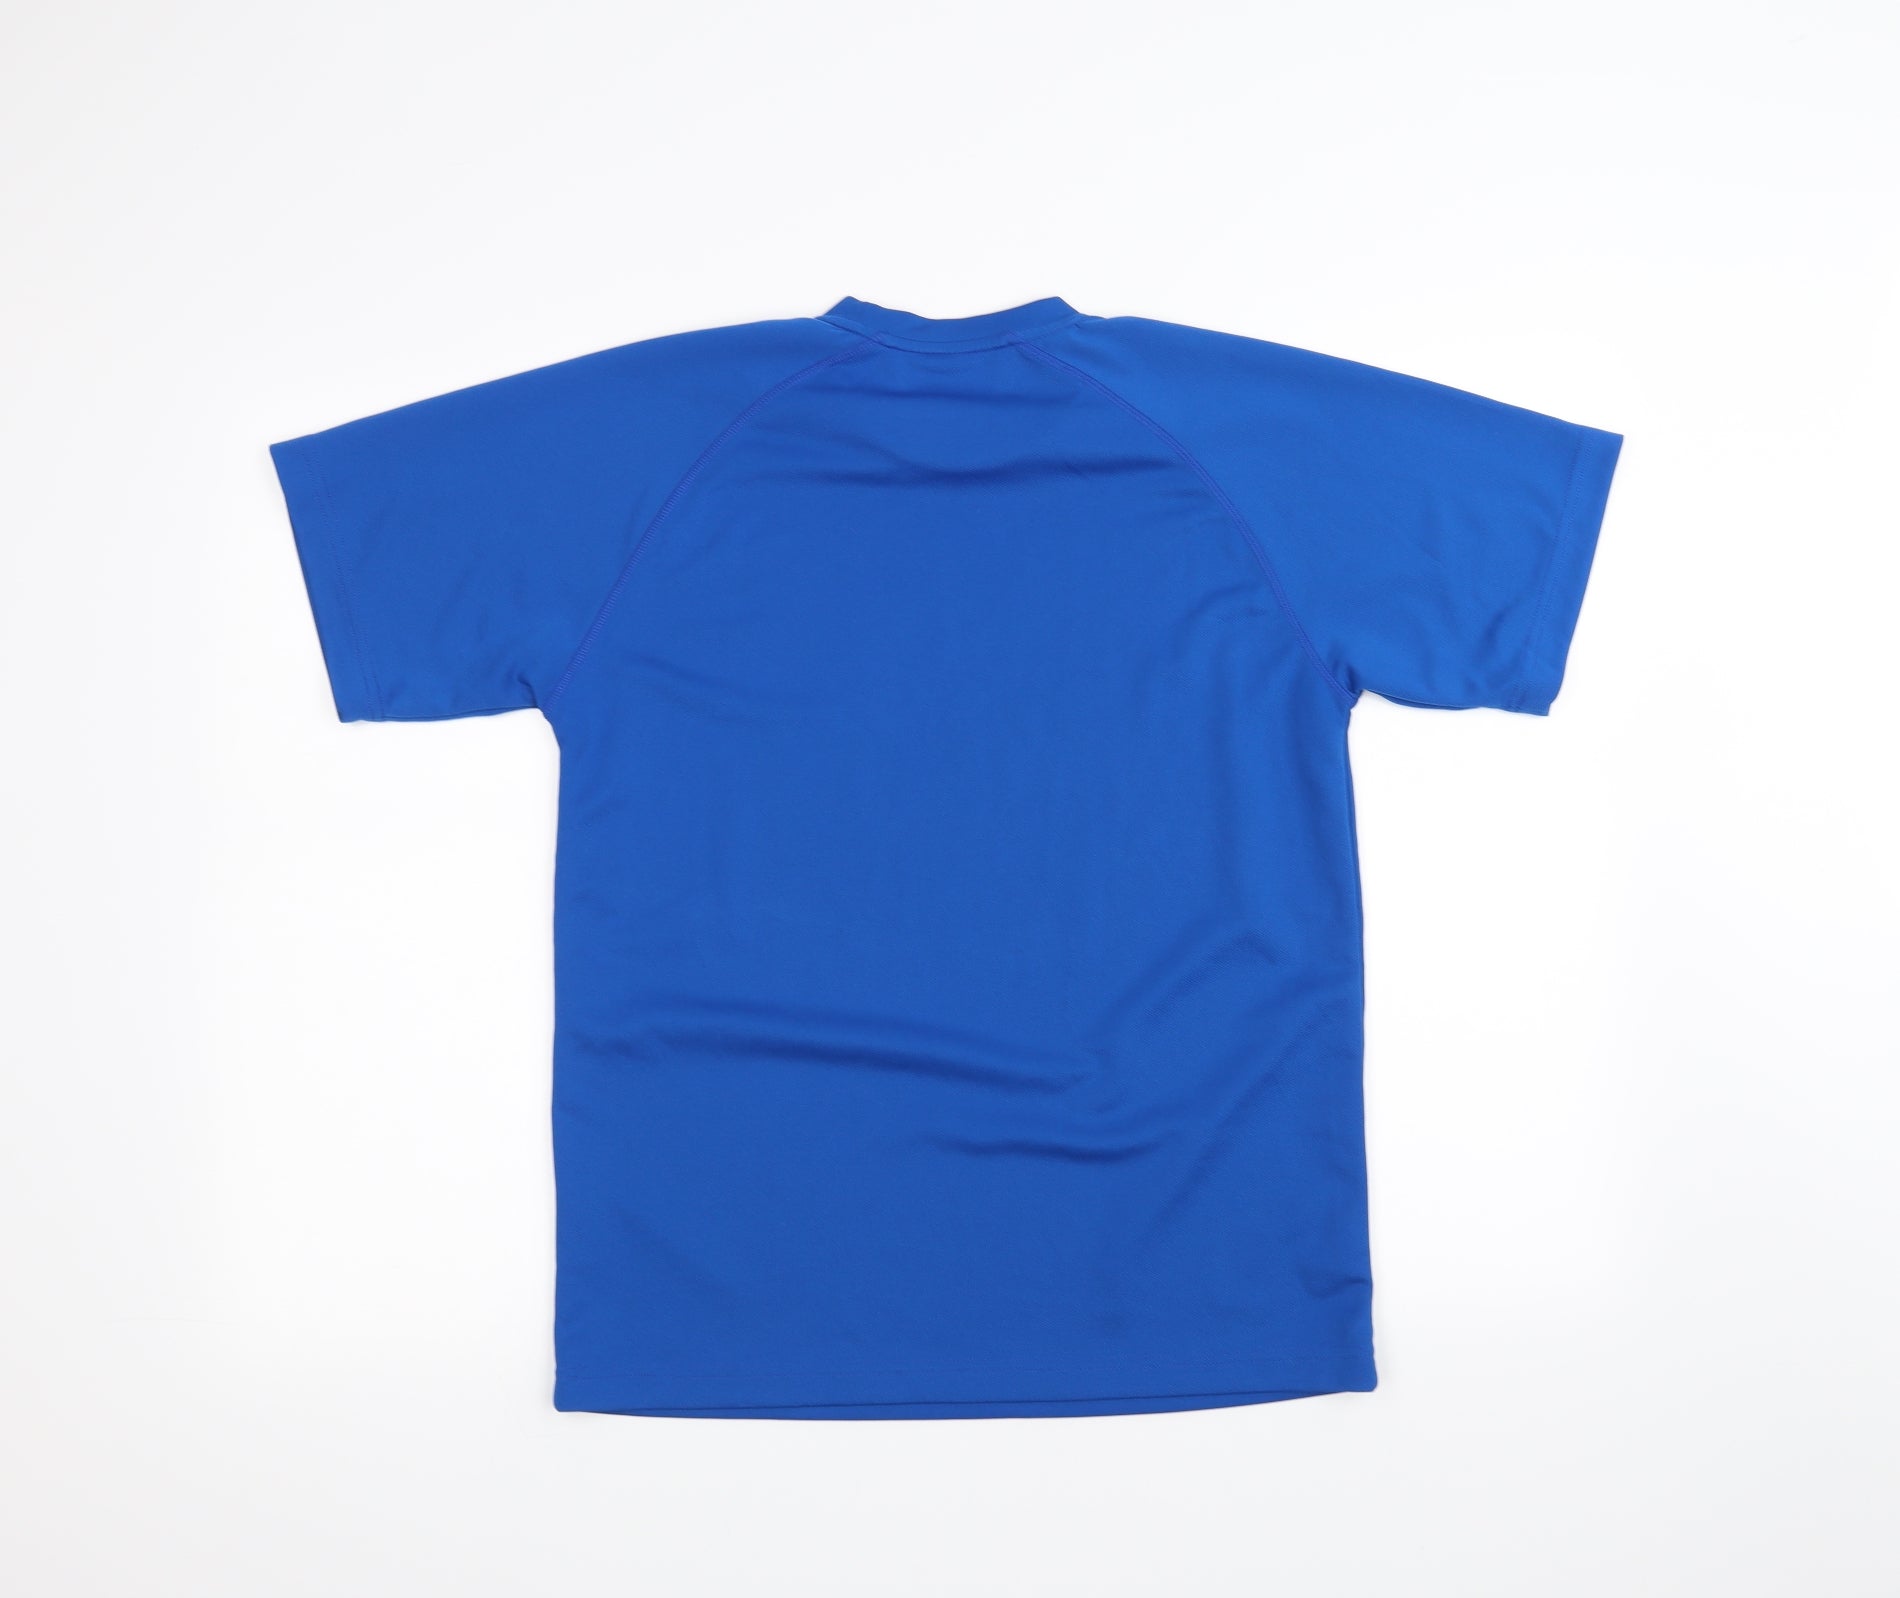 Souluxe Mens Blue Basic T-Shirt Size S – Preworn Ltd